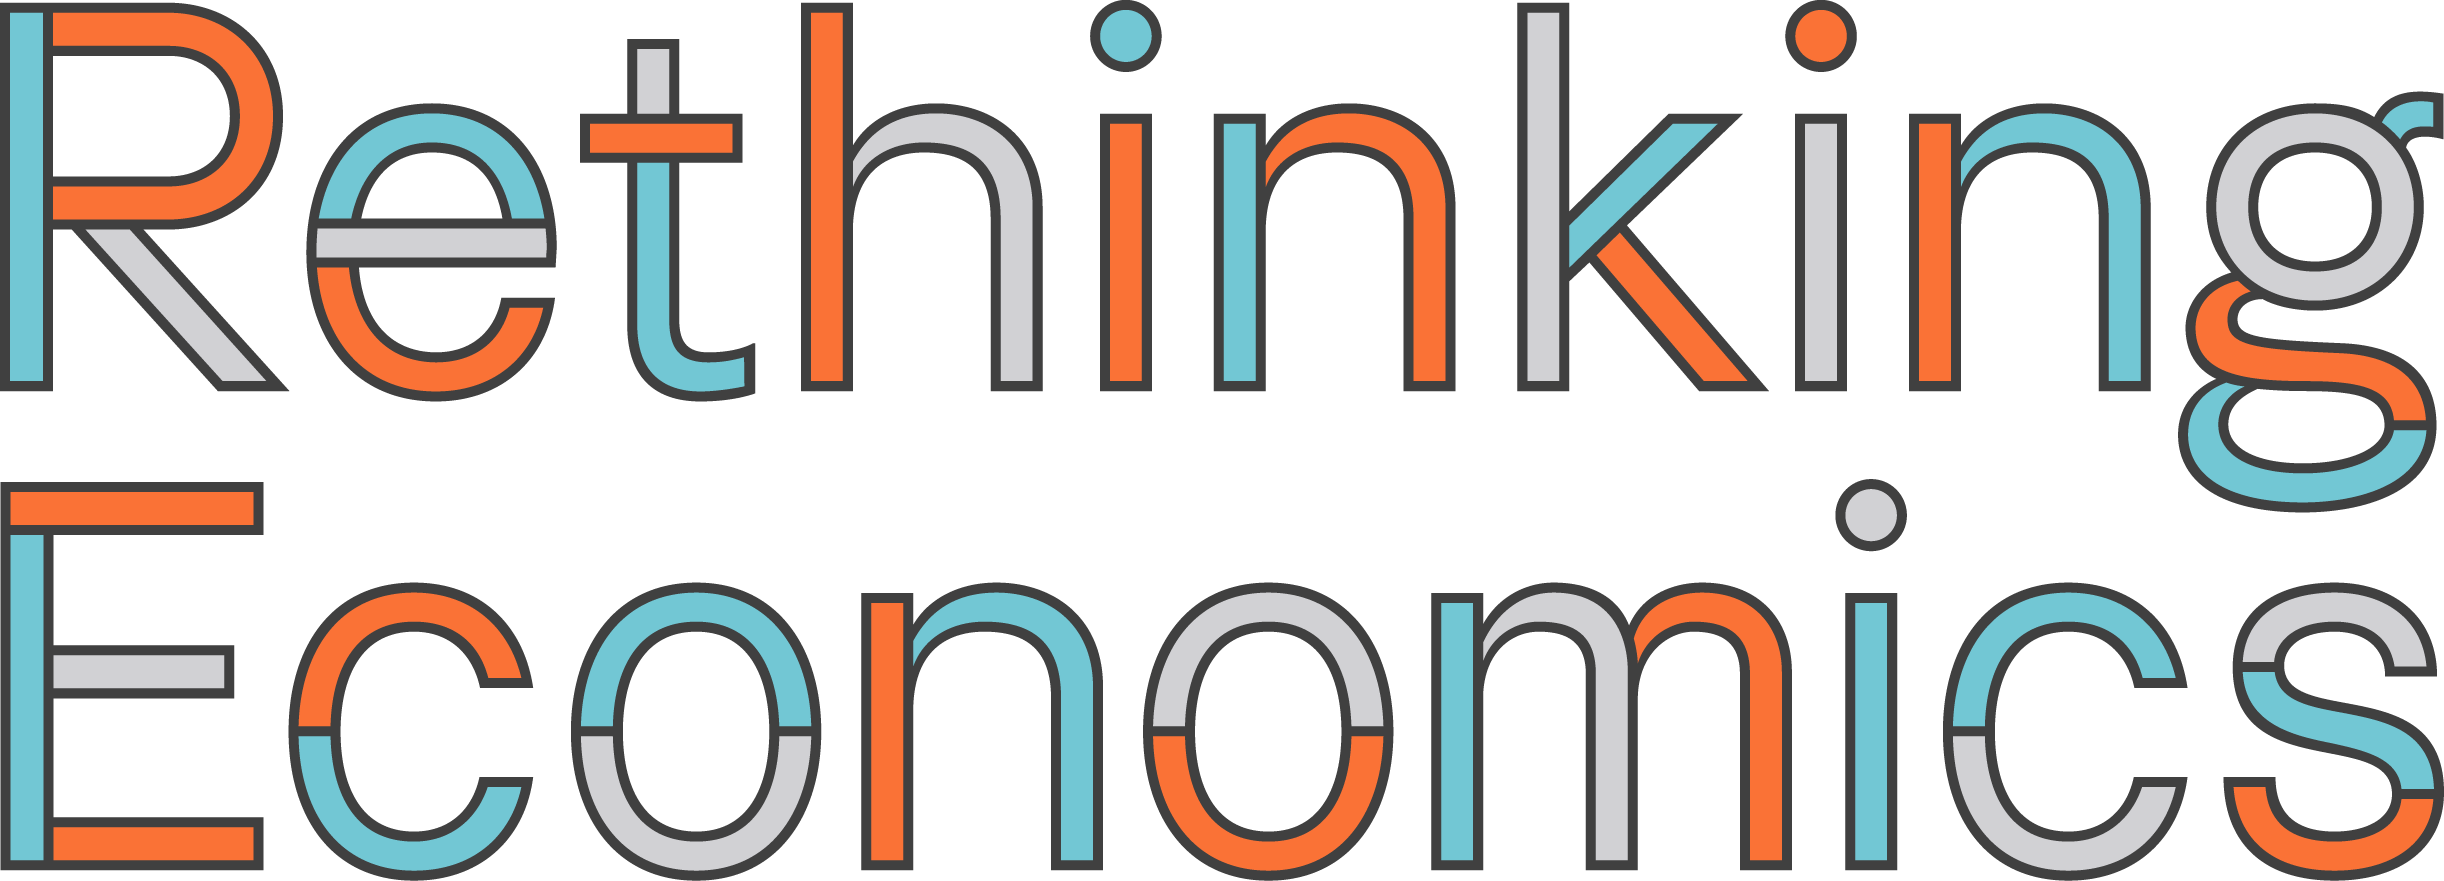 Economics Logo - Rethinking Economics Logotype Final Digital_FULL LOGO